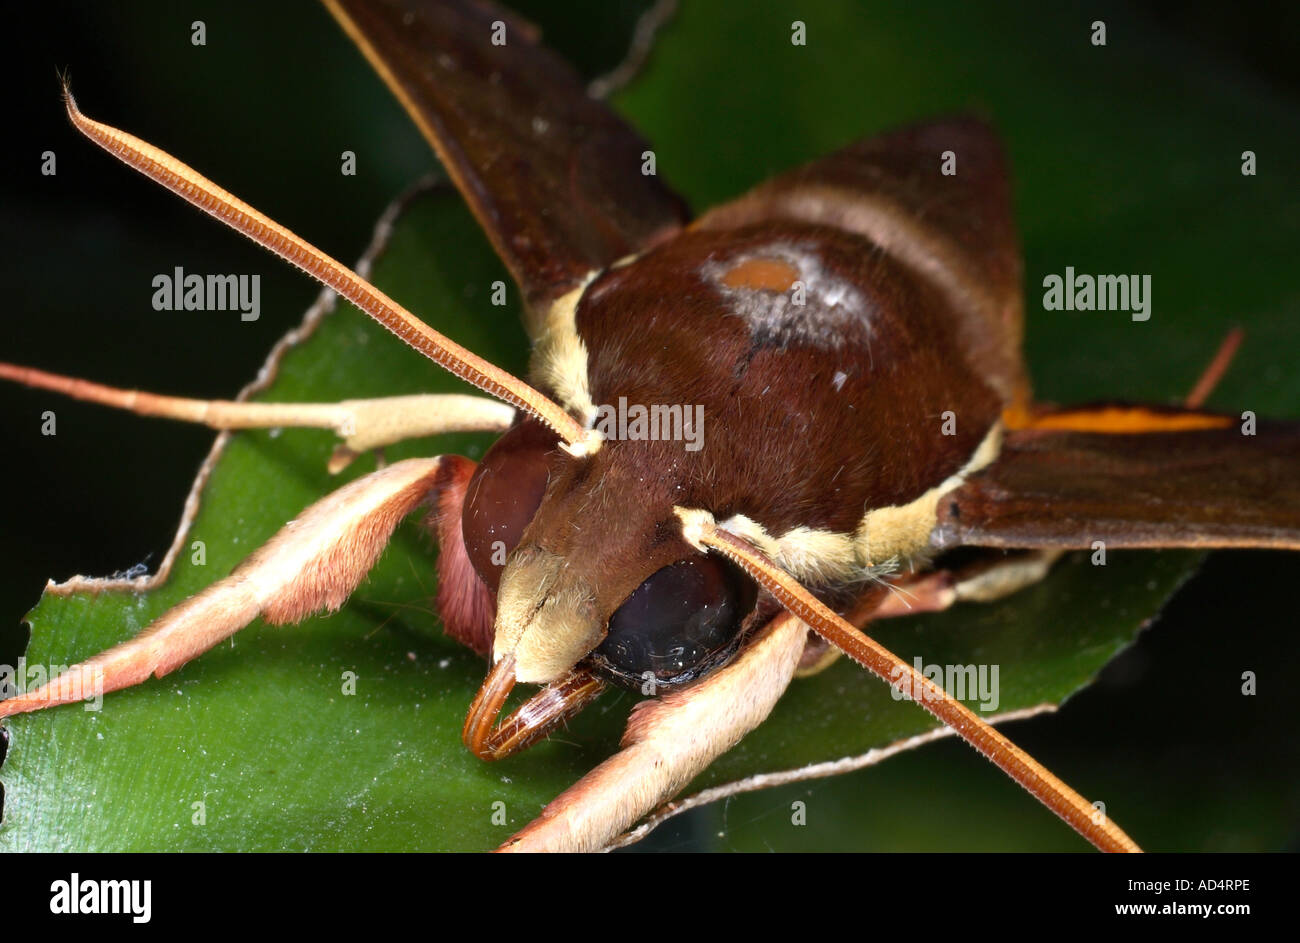 White-Brow Hawkmoth, Gnathothlibus erotus, closeup showing the head antennae and proboscis Stock Photo